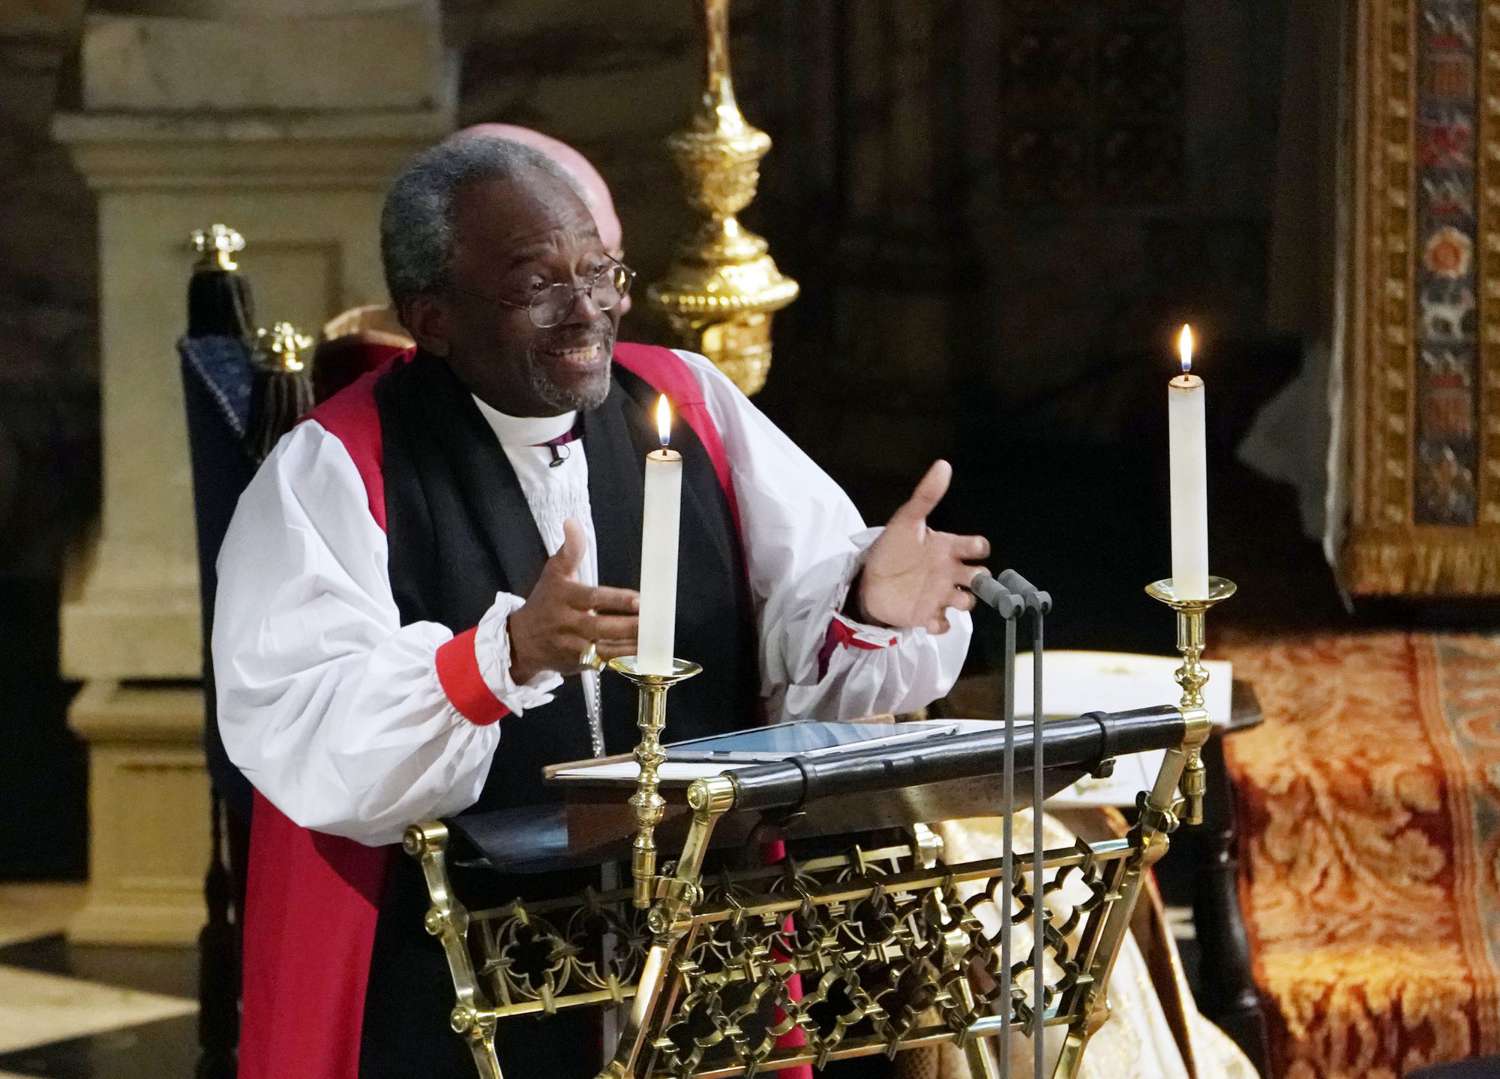 Bishop Michael Curry at Royal Wedding 2018